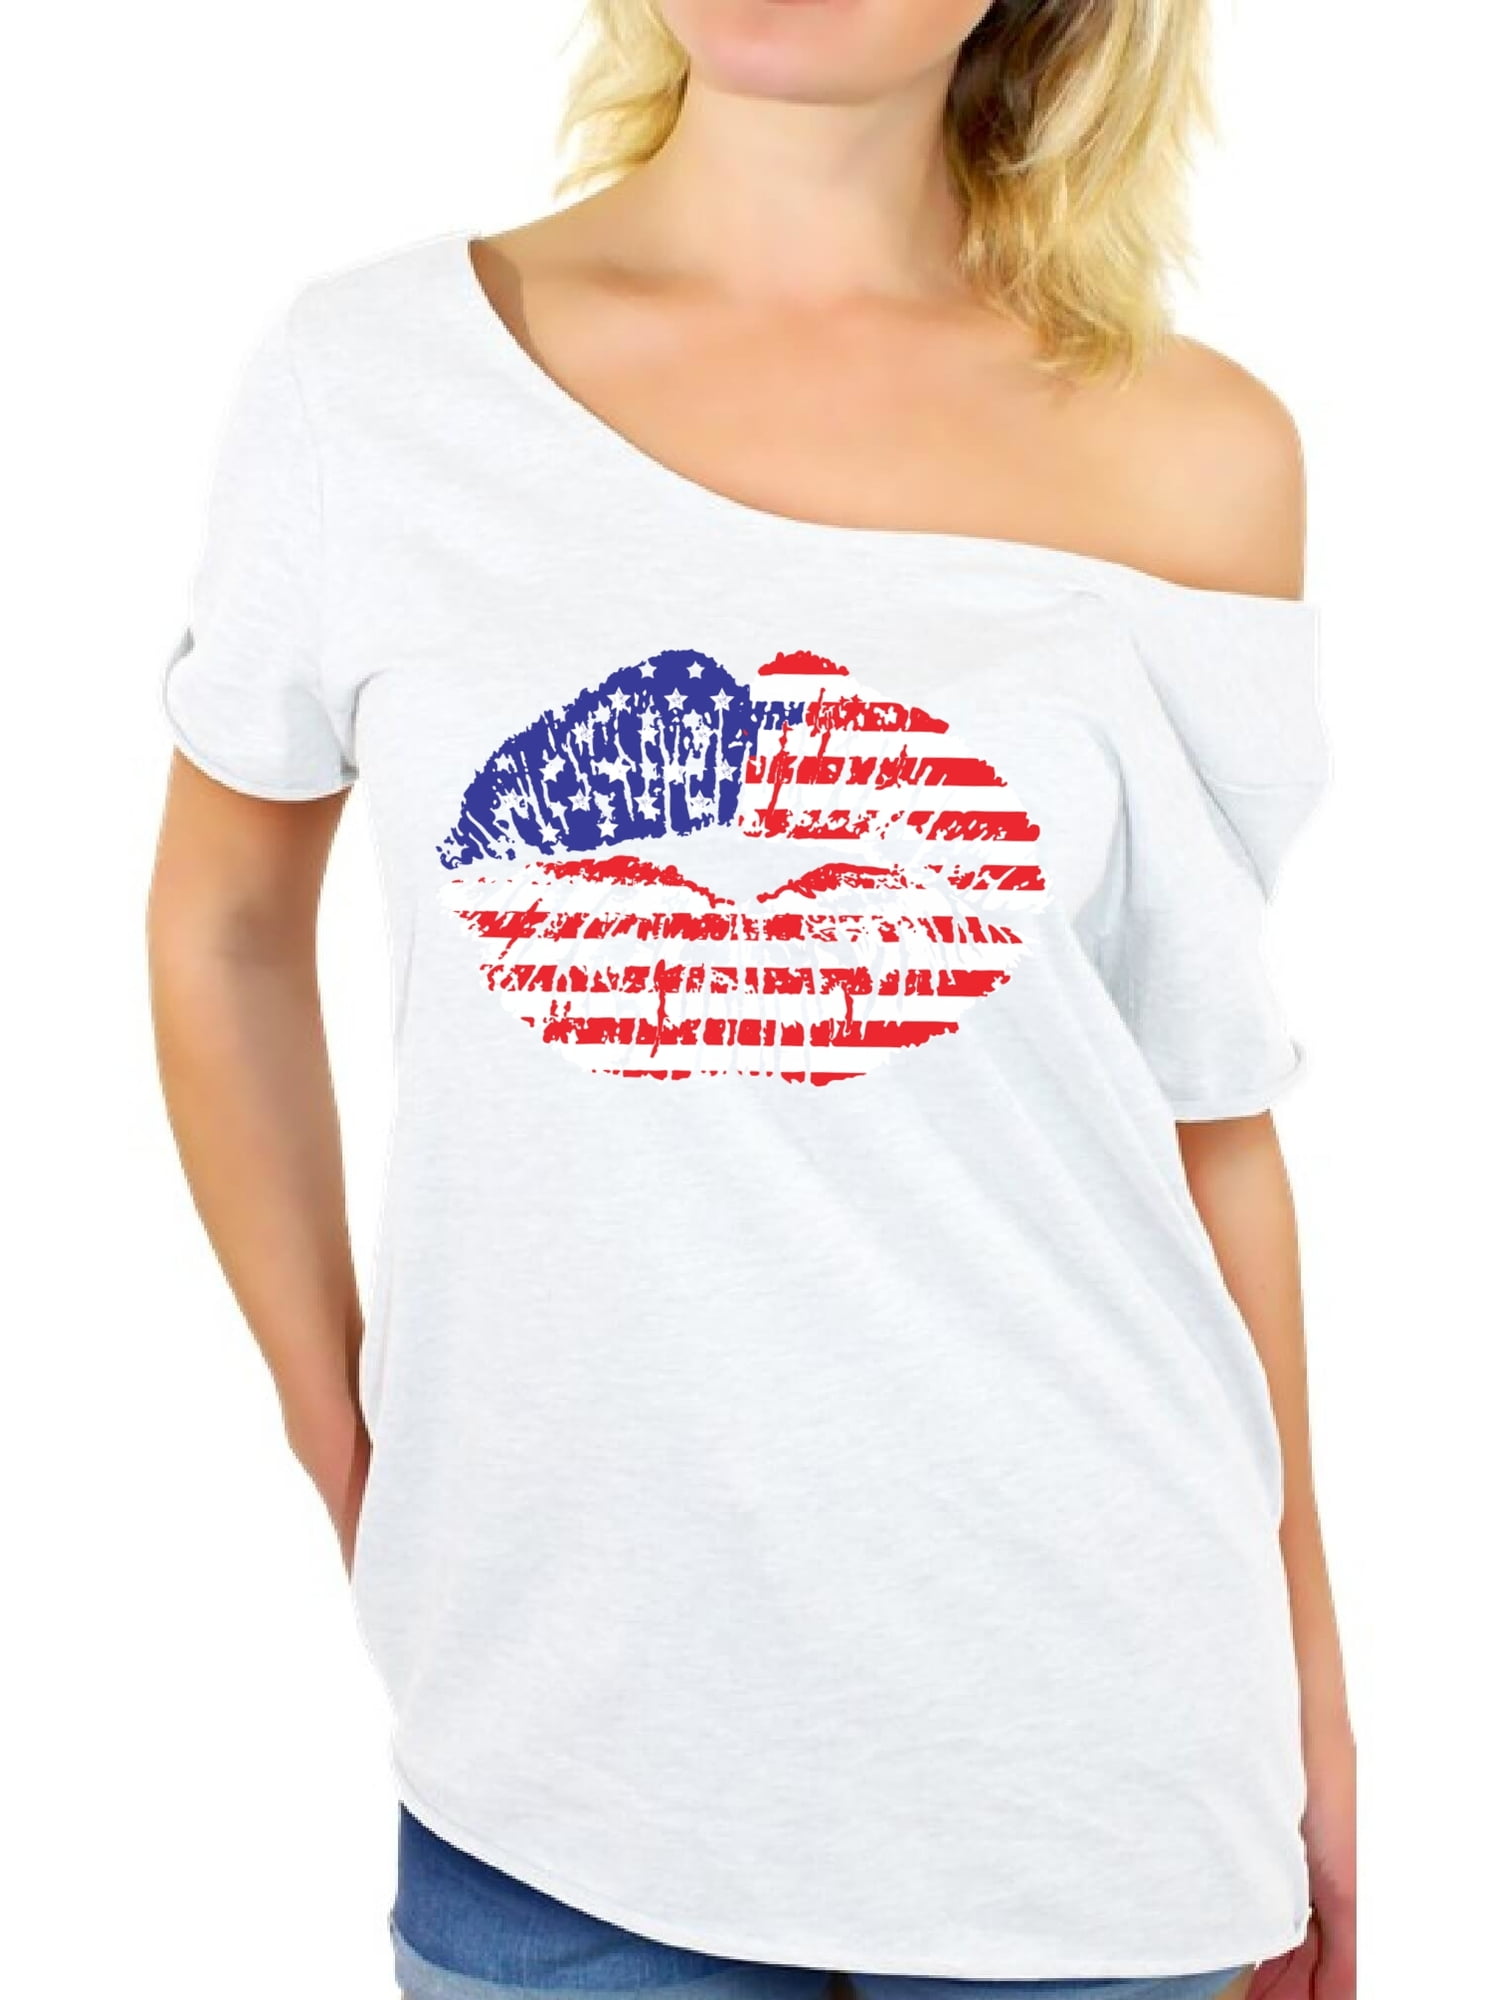 American flag lips Boys Girls Birthday gift Top T shirt 121 